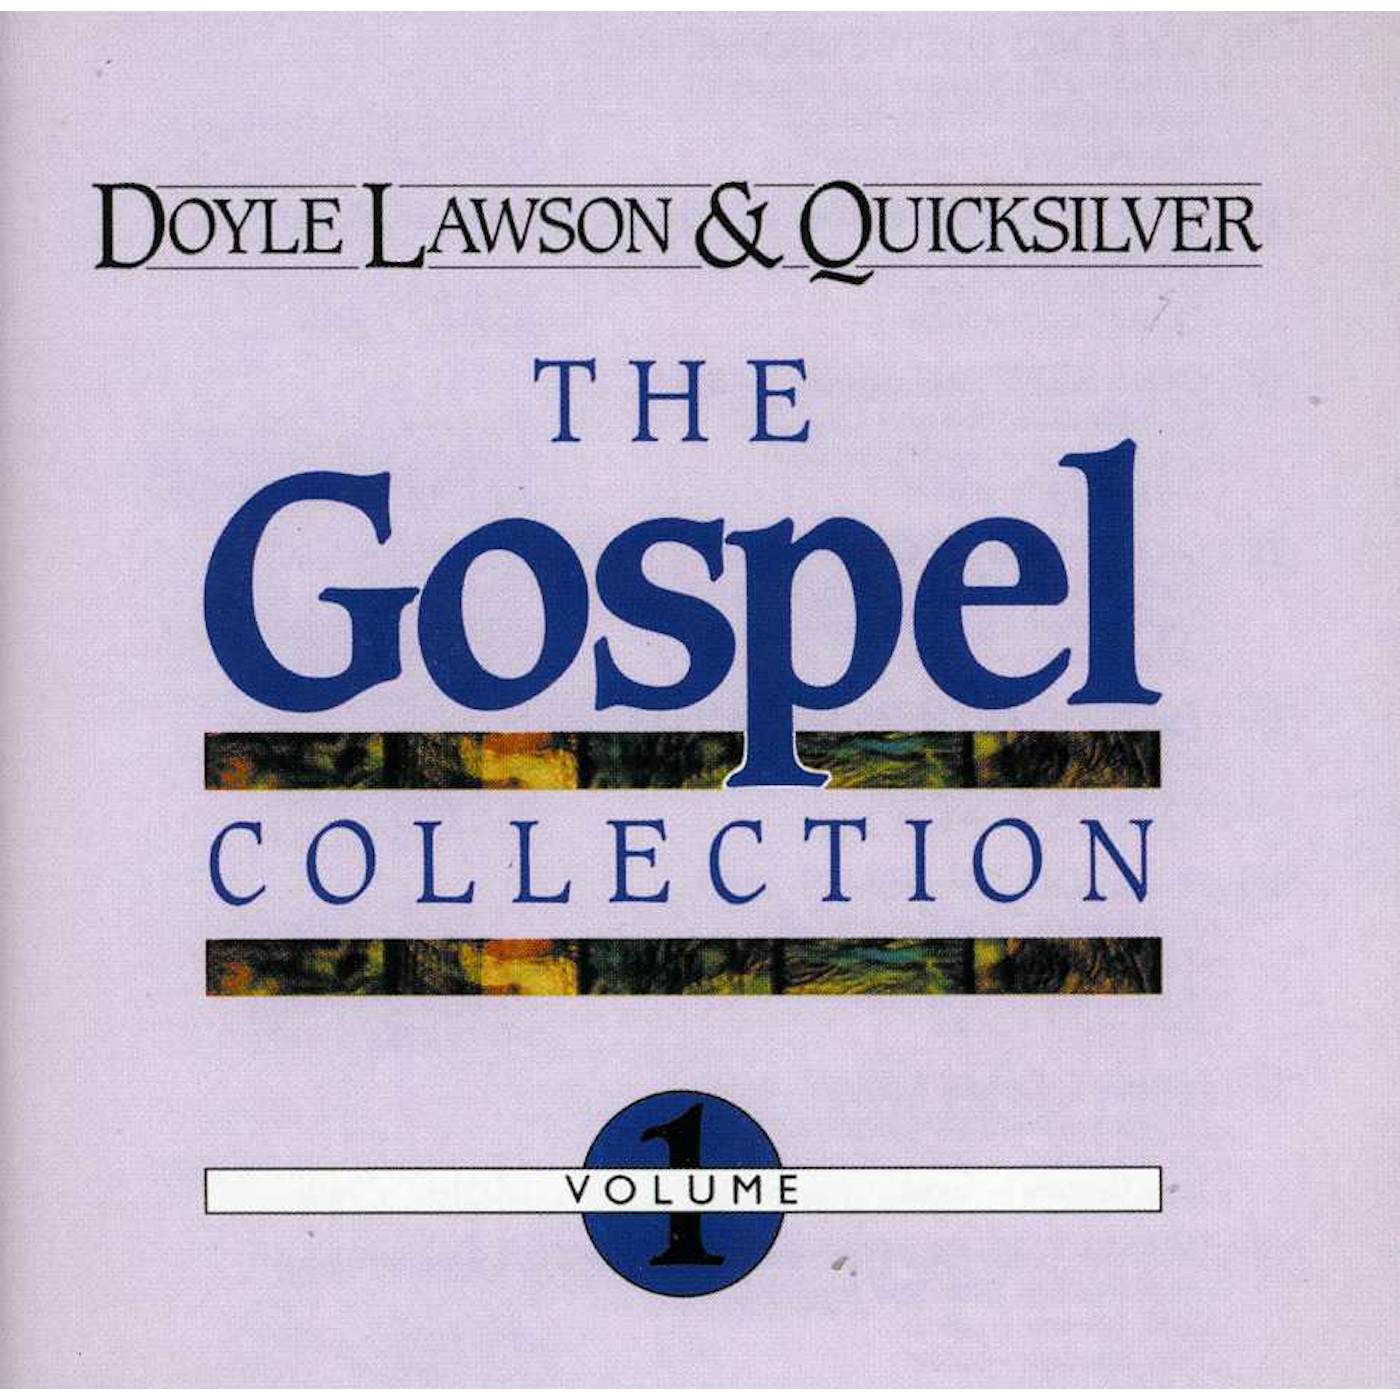 Doyle Lawson & Quicksilver GOSPEL COLLECTION 1 CD